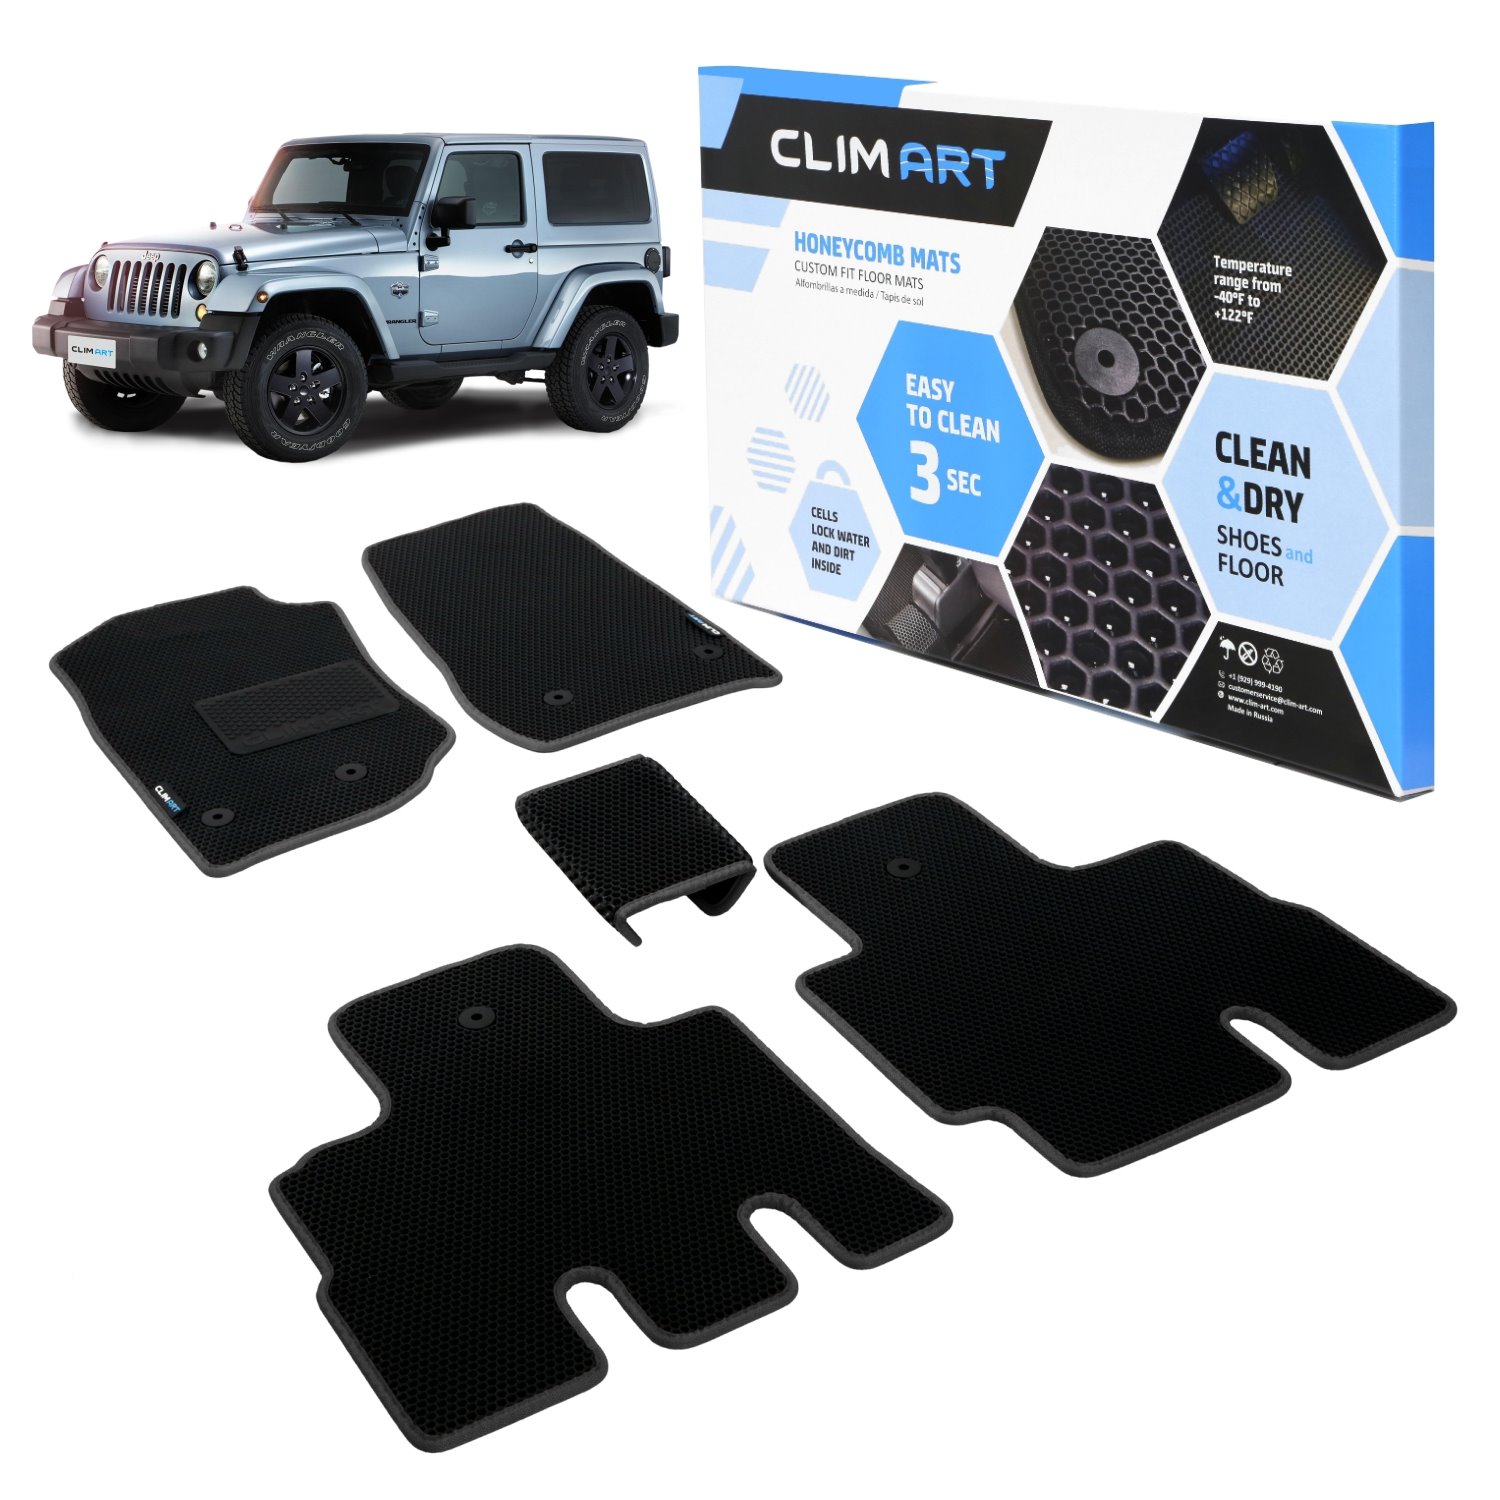 CLIM ART Honeycomb Custom Fit Floor Mats for 2014-2018 Jeep Wrangler